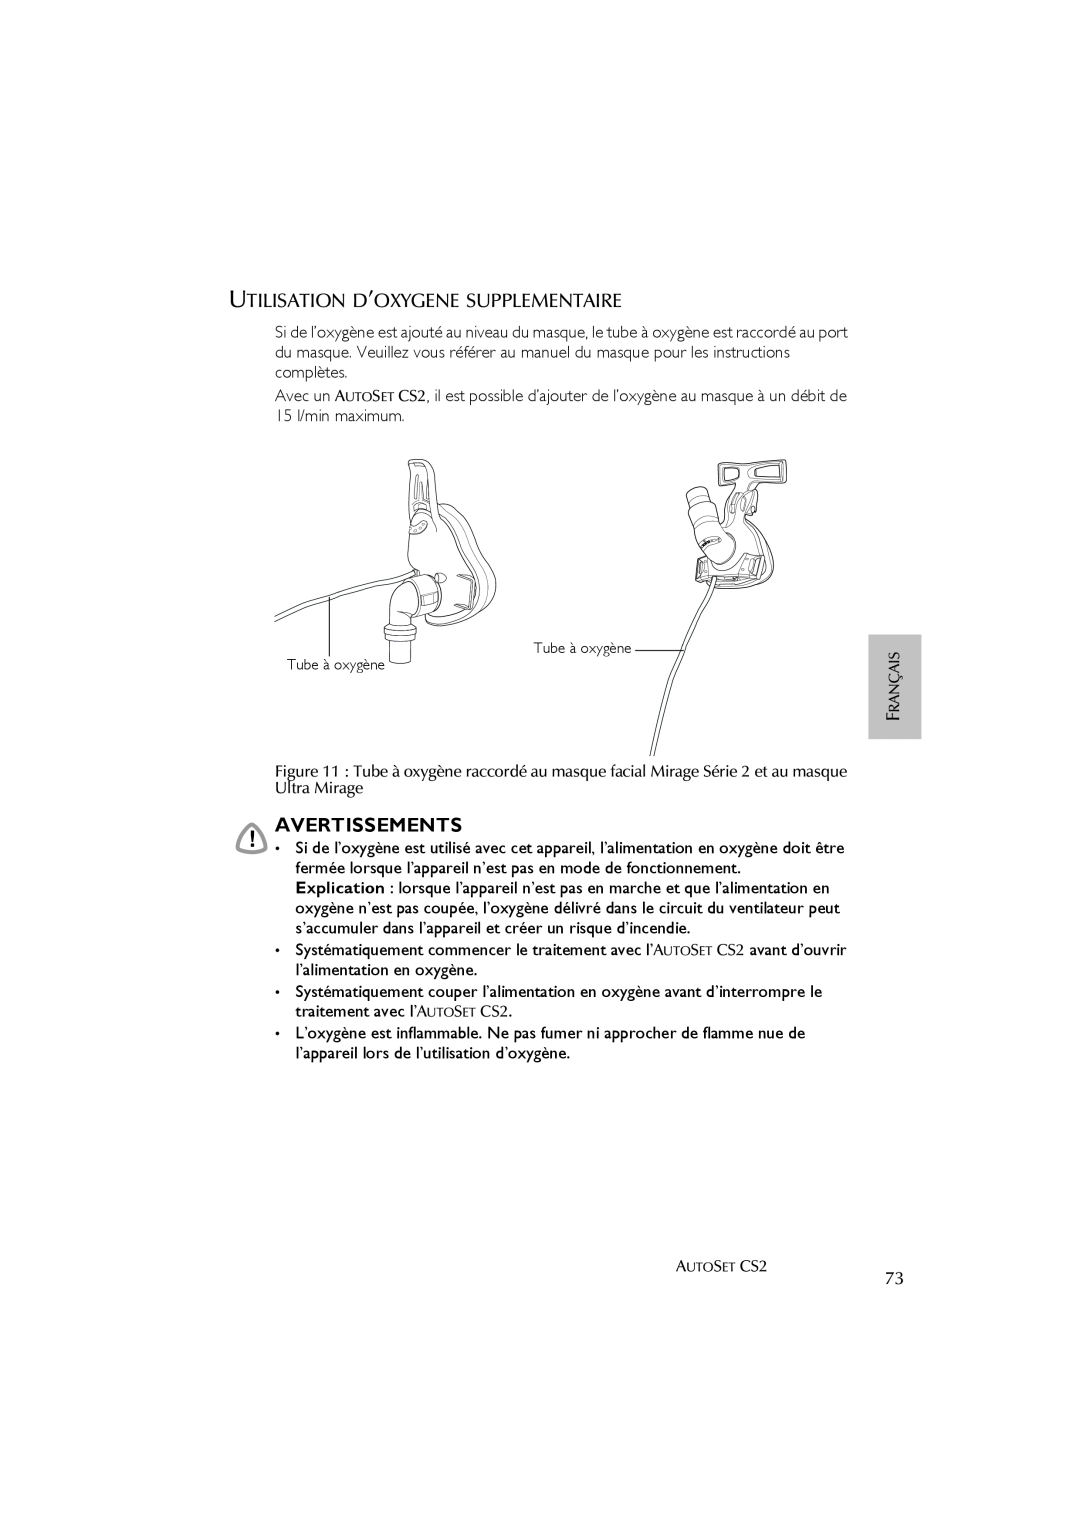 ResMed AutoSet CS 2 user manual Avertissements, Utilisation D’Oxygene Supplementaire 